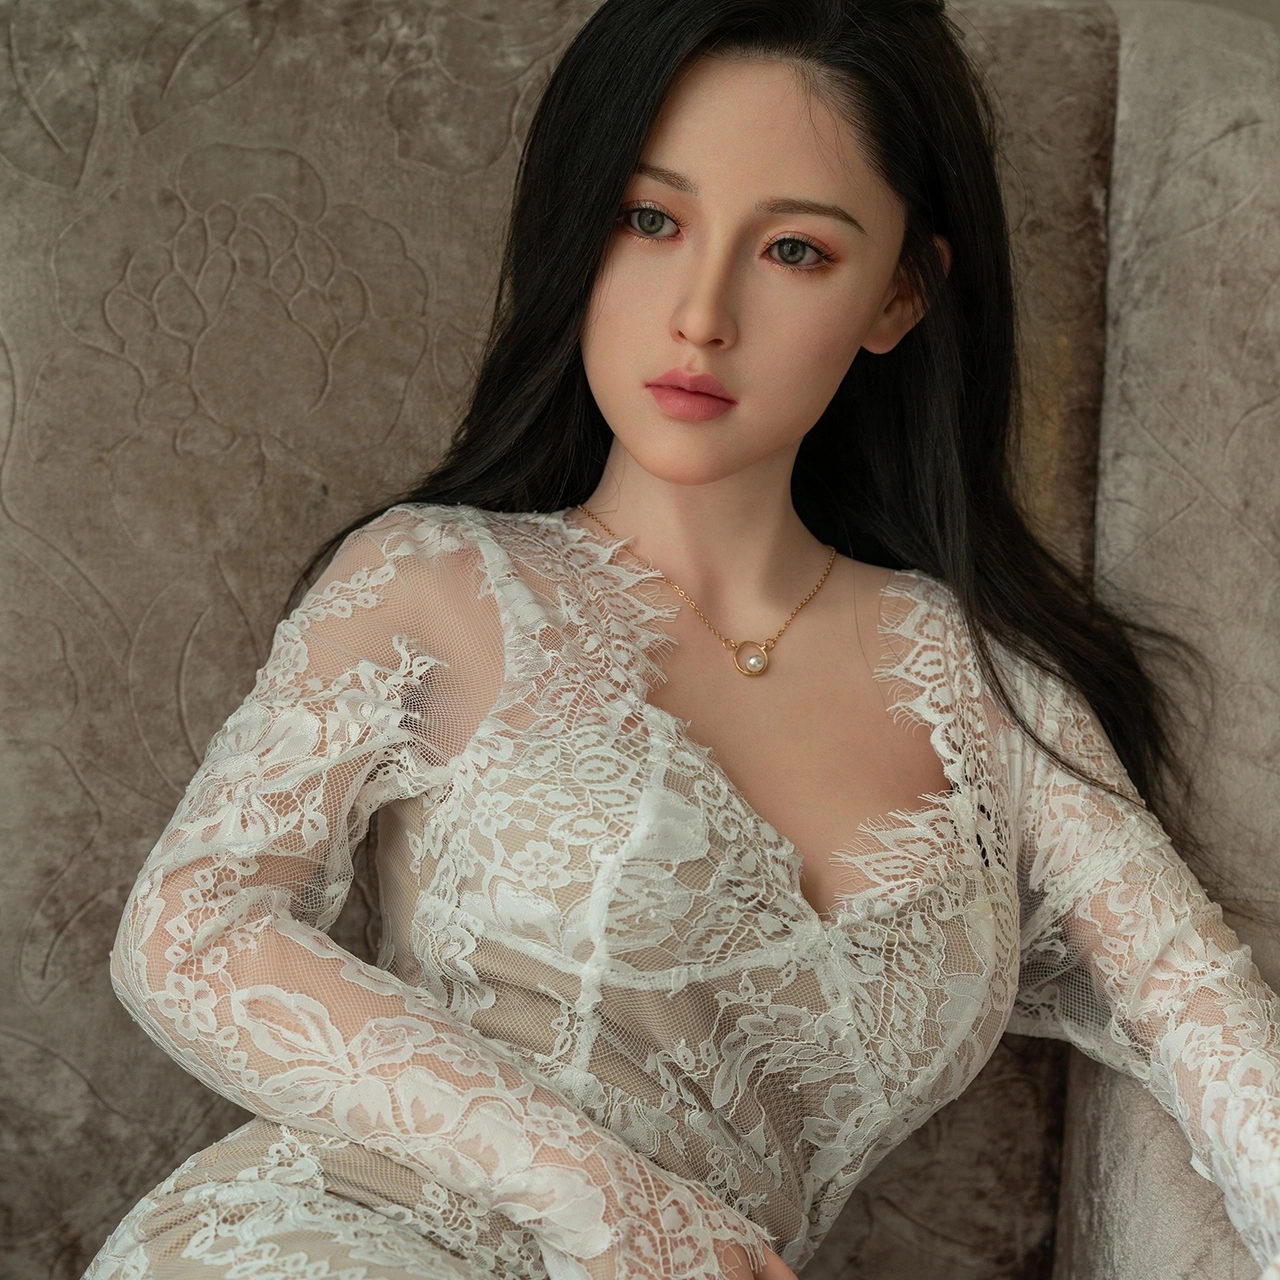 165cm Asian Adult Sex Dolls - Coco